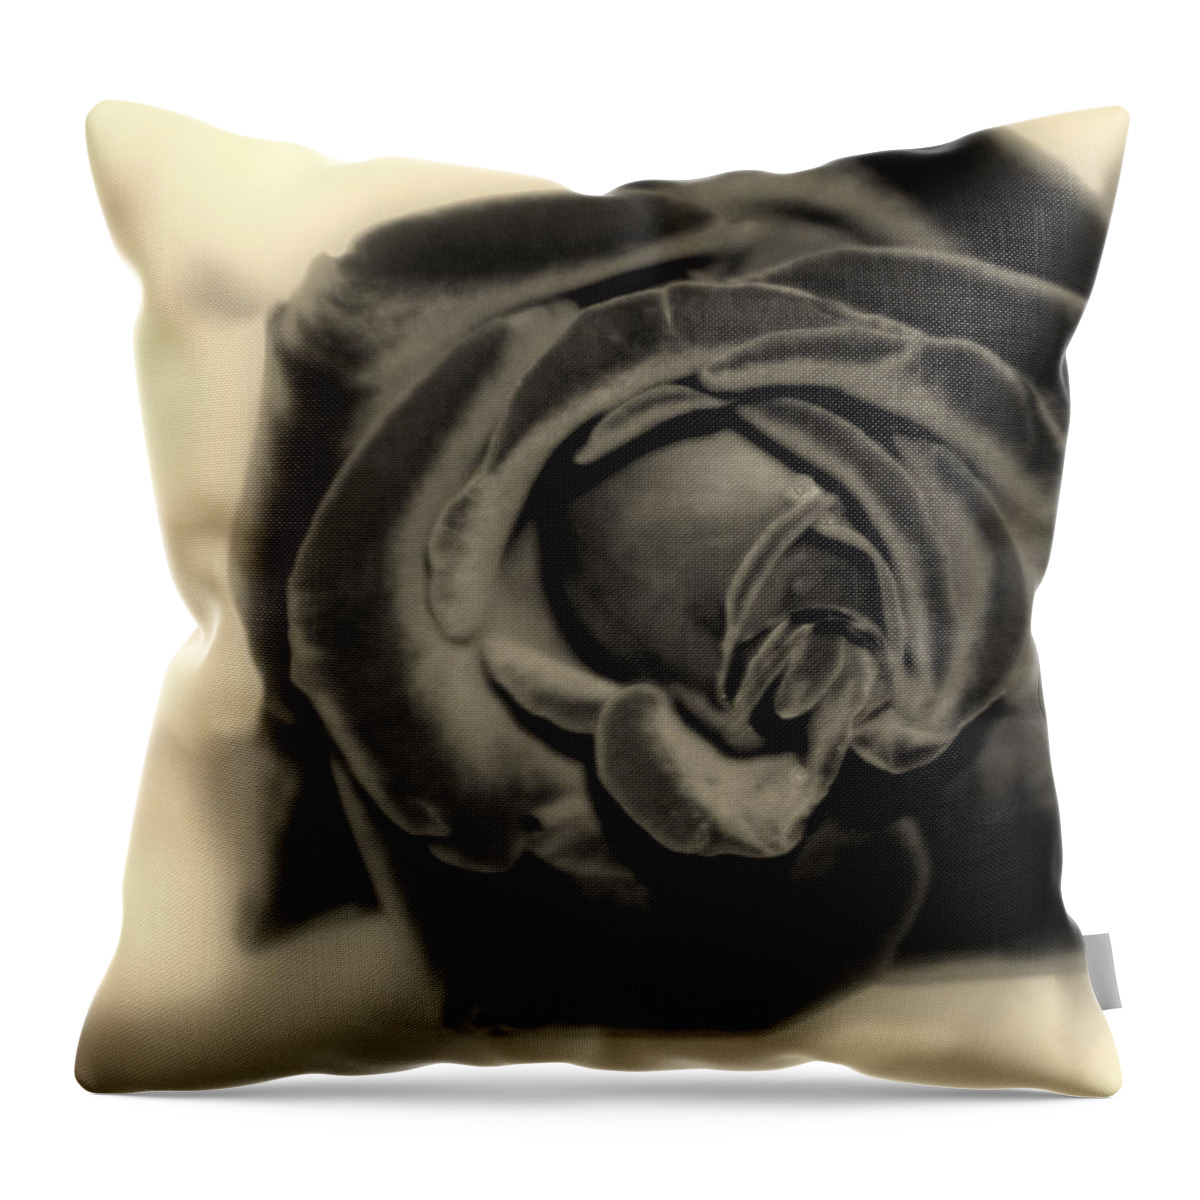 Dark Throw Pillow featuring the photograph Dark Beauty by Kay Novy